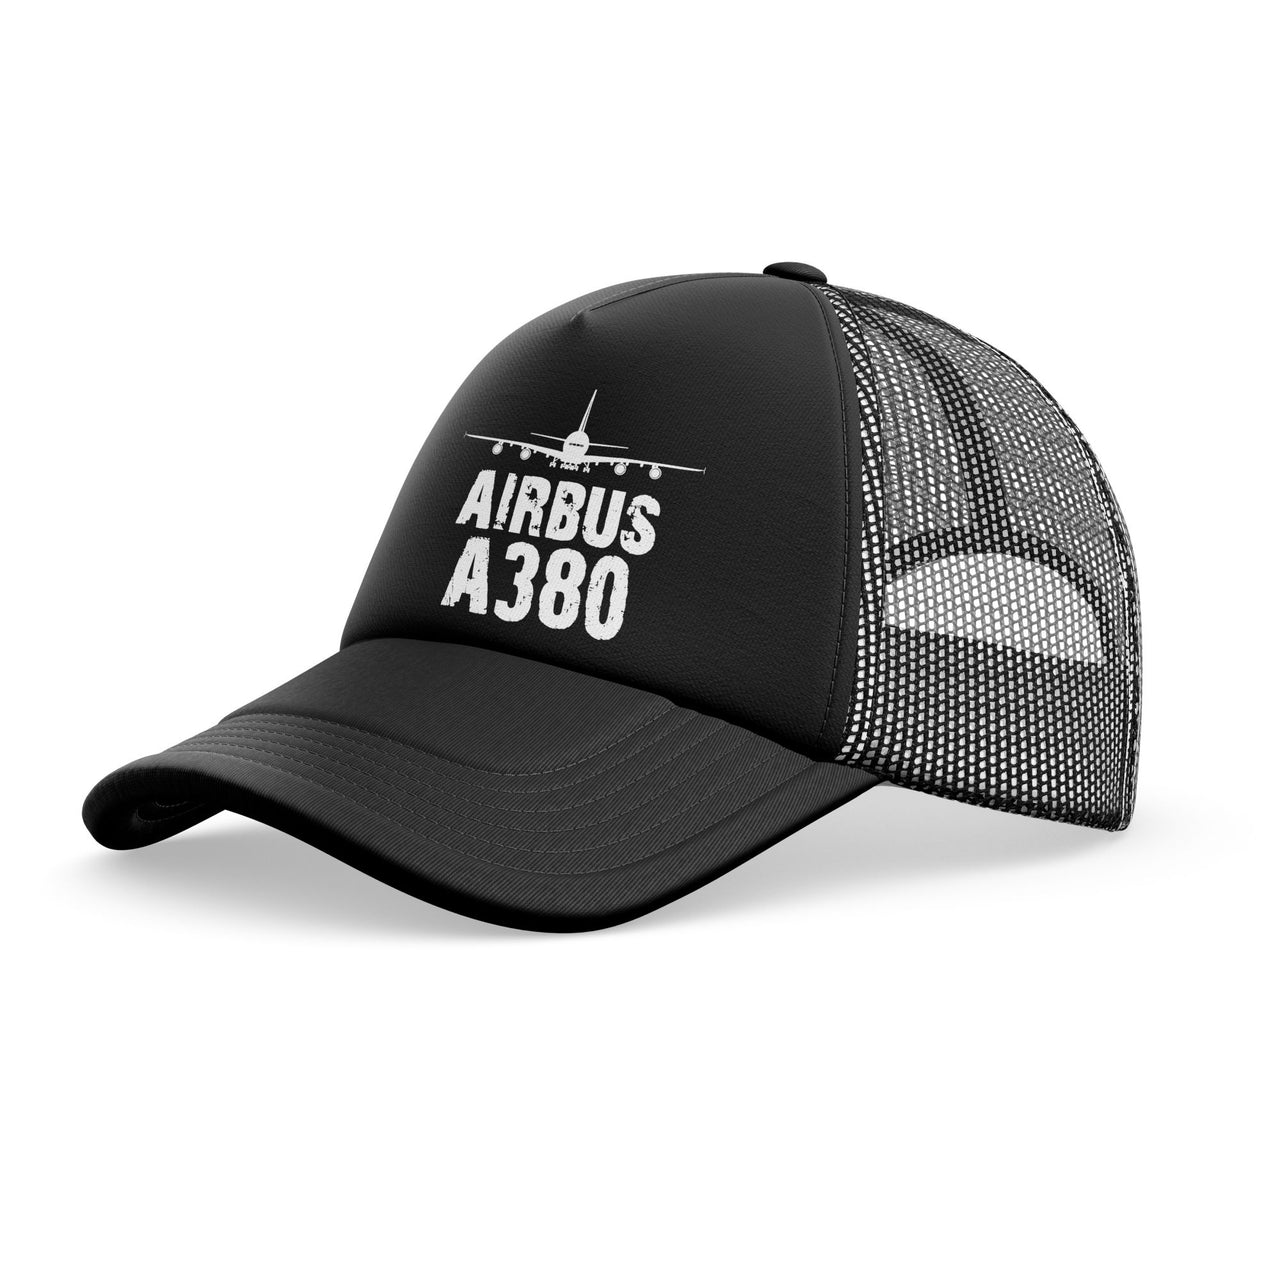 Airbus A380 & Plane Designed Trucker Caps & Hats